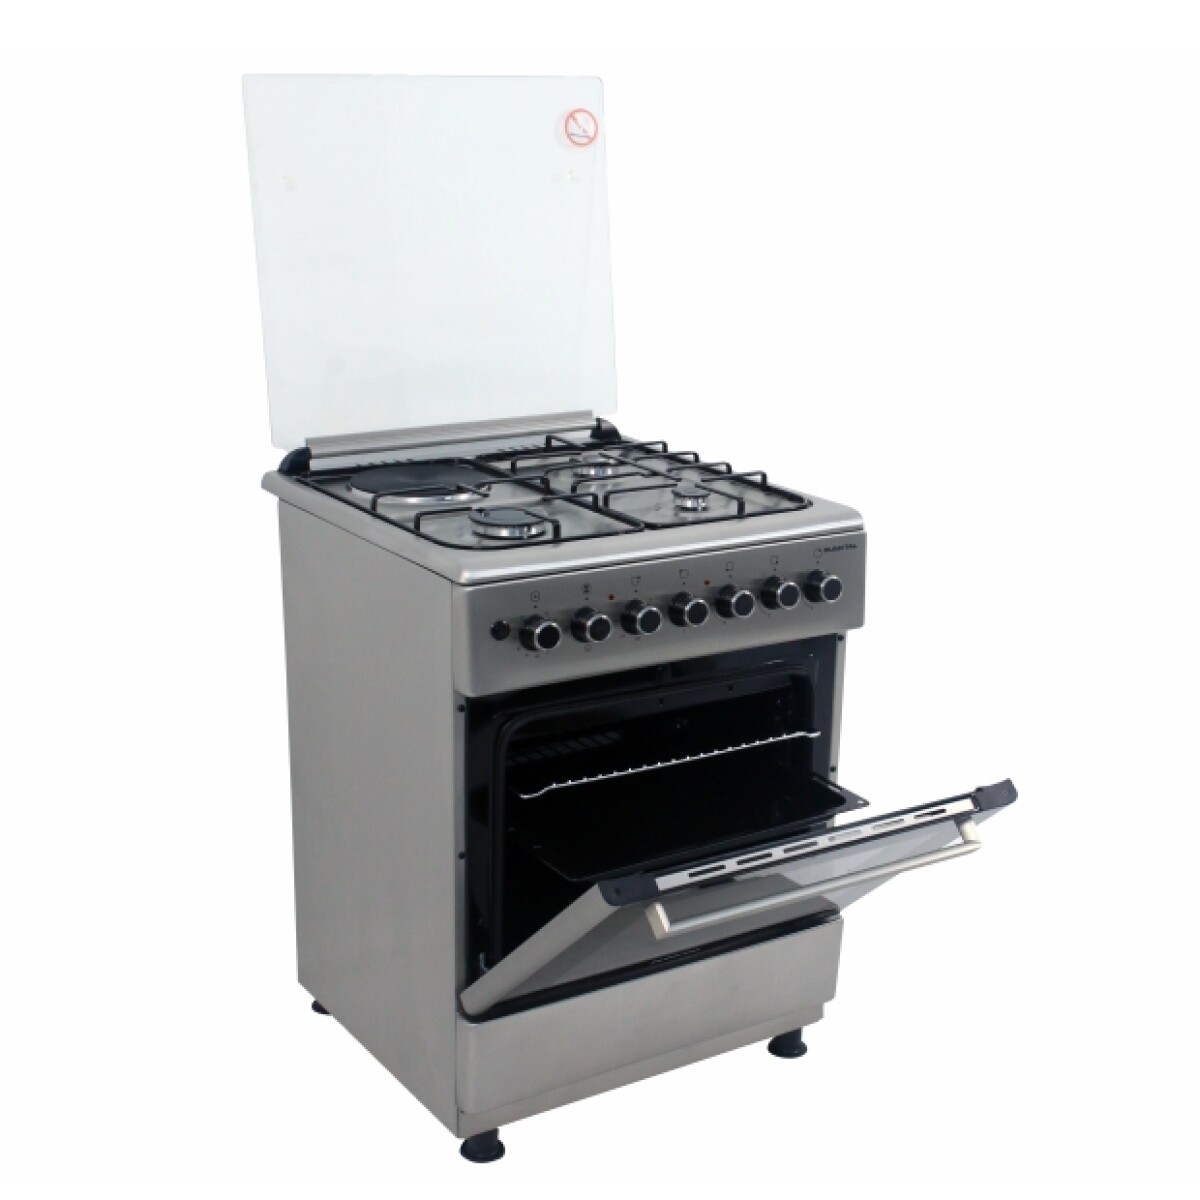 Punktal cocina combinada 4 hornallas acero inoxidable horno eléctrico / grill eléctrico turca - PK1050ETK 